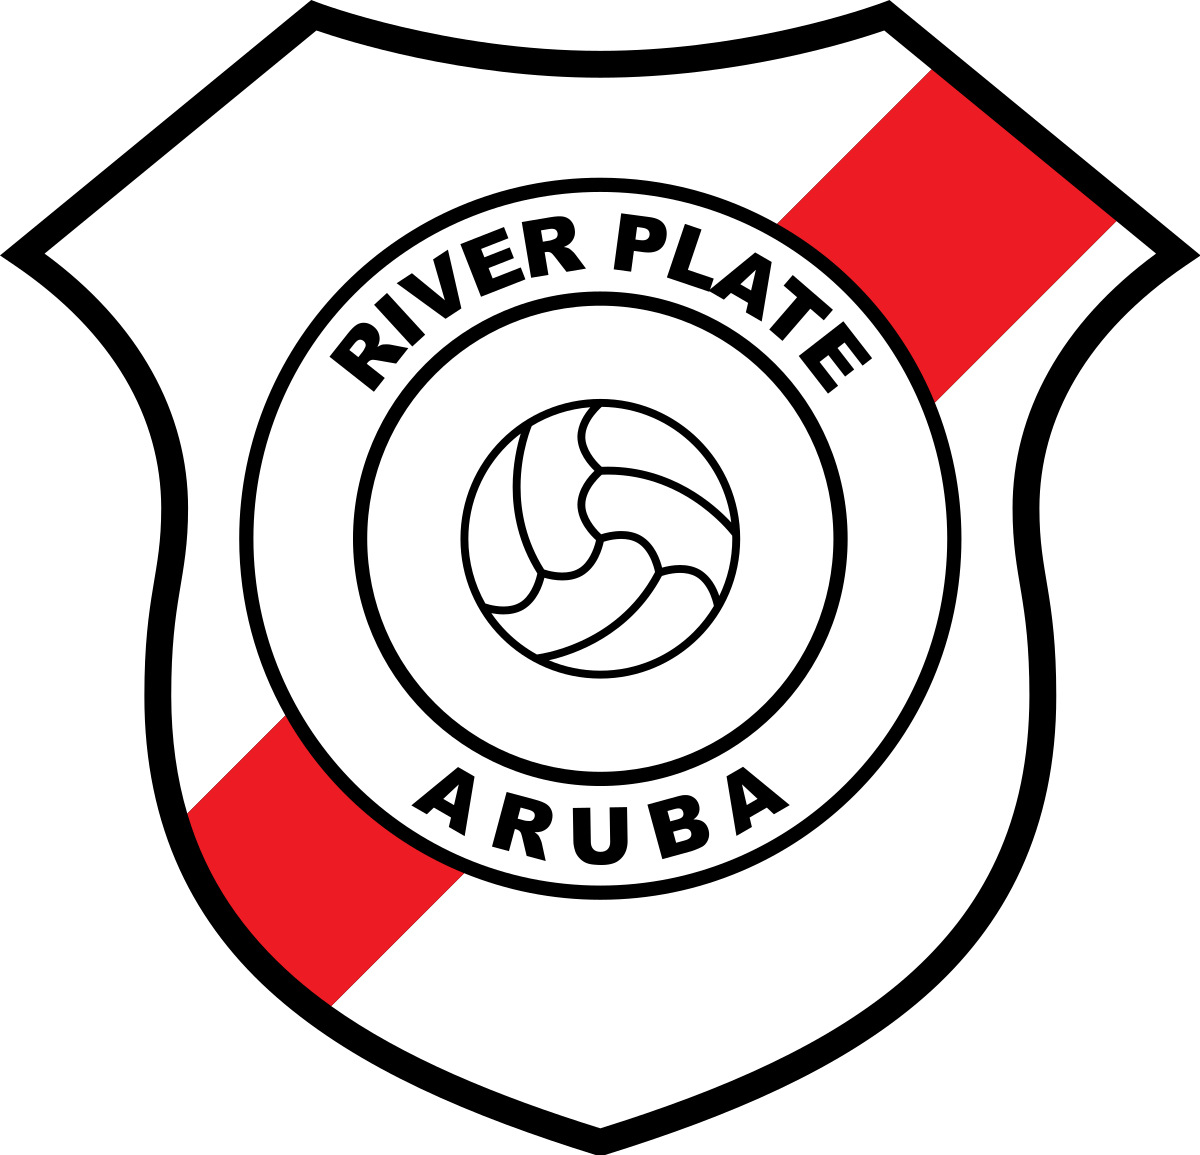 River Plate Ar. logo